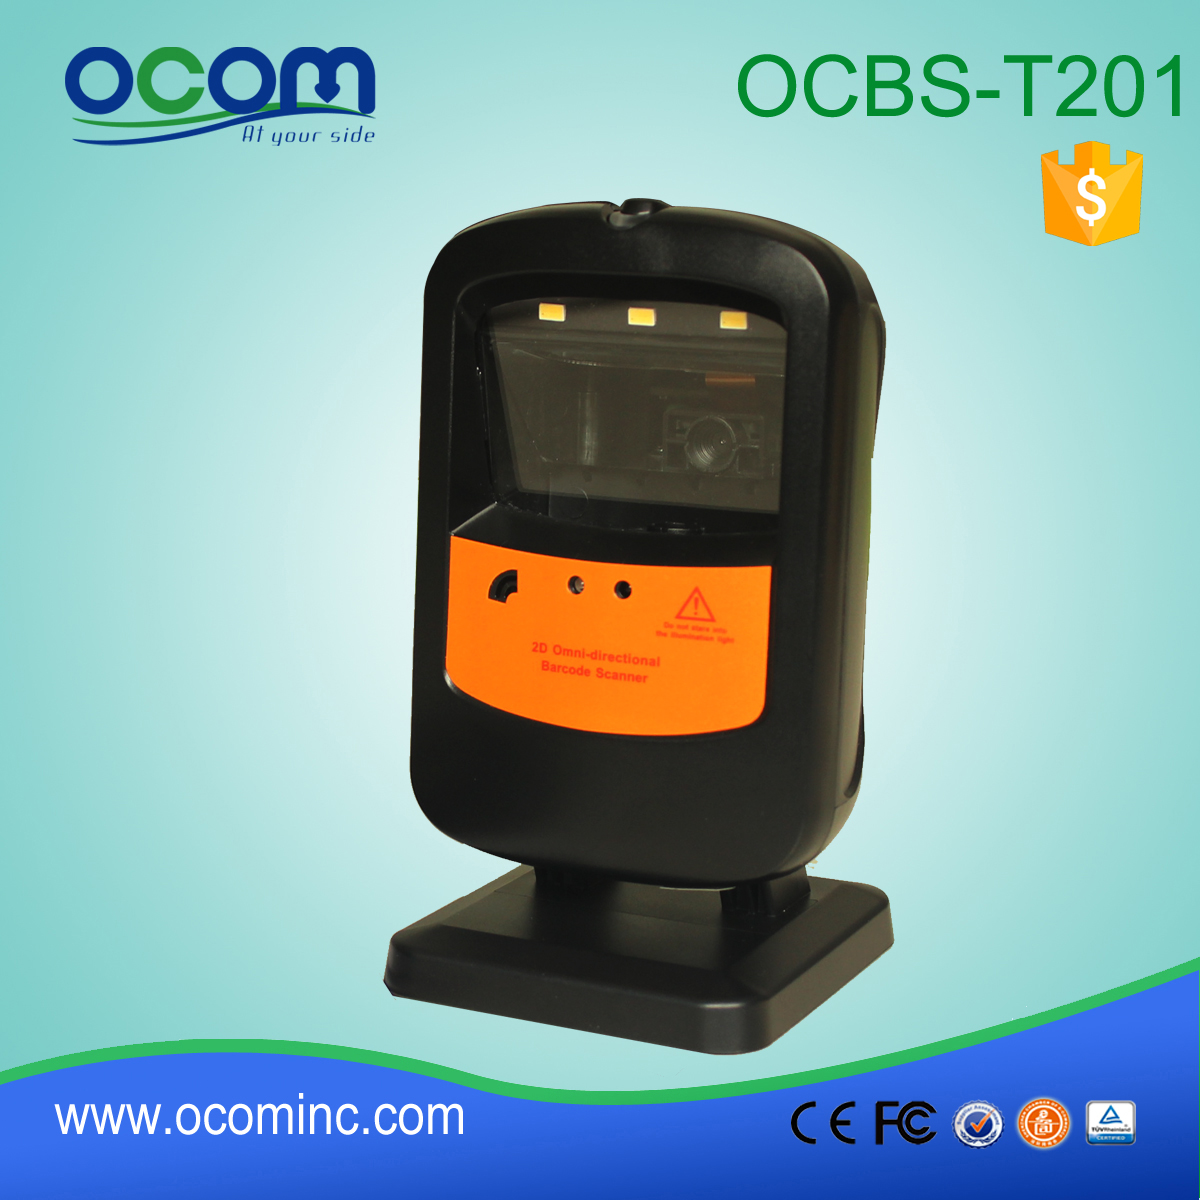 OCBs-T201: omnidirecional rs232 barcode scanner, inventário barcode scanner